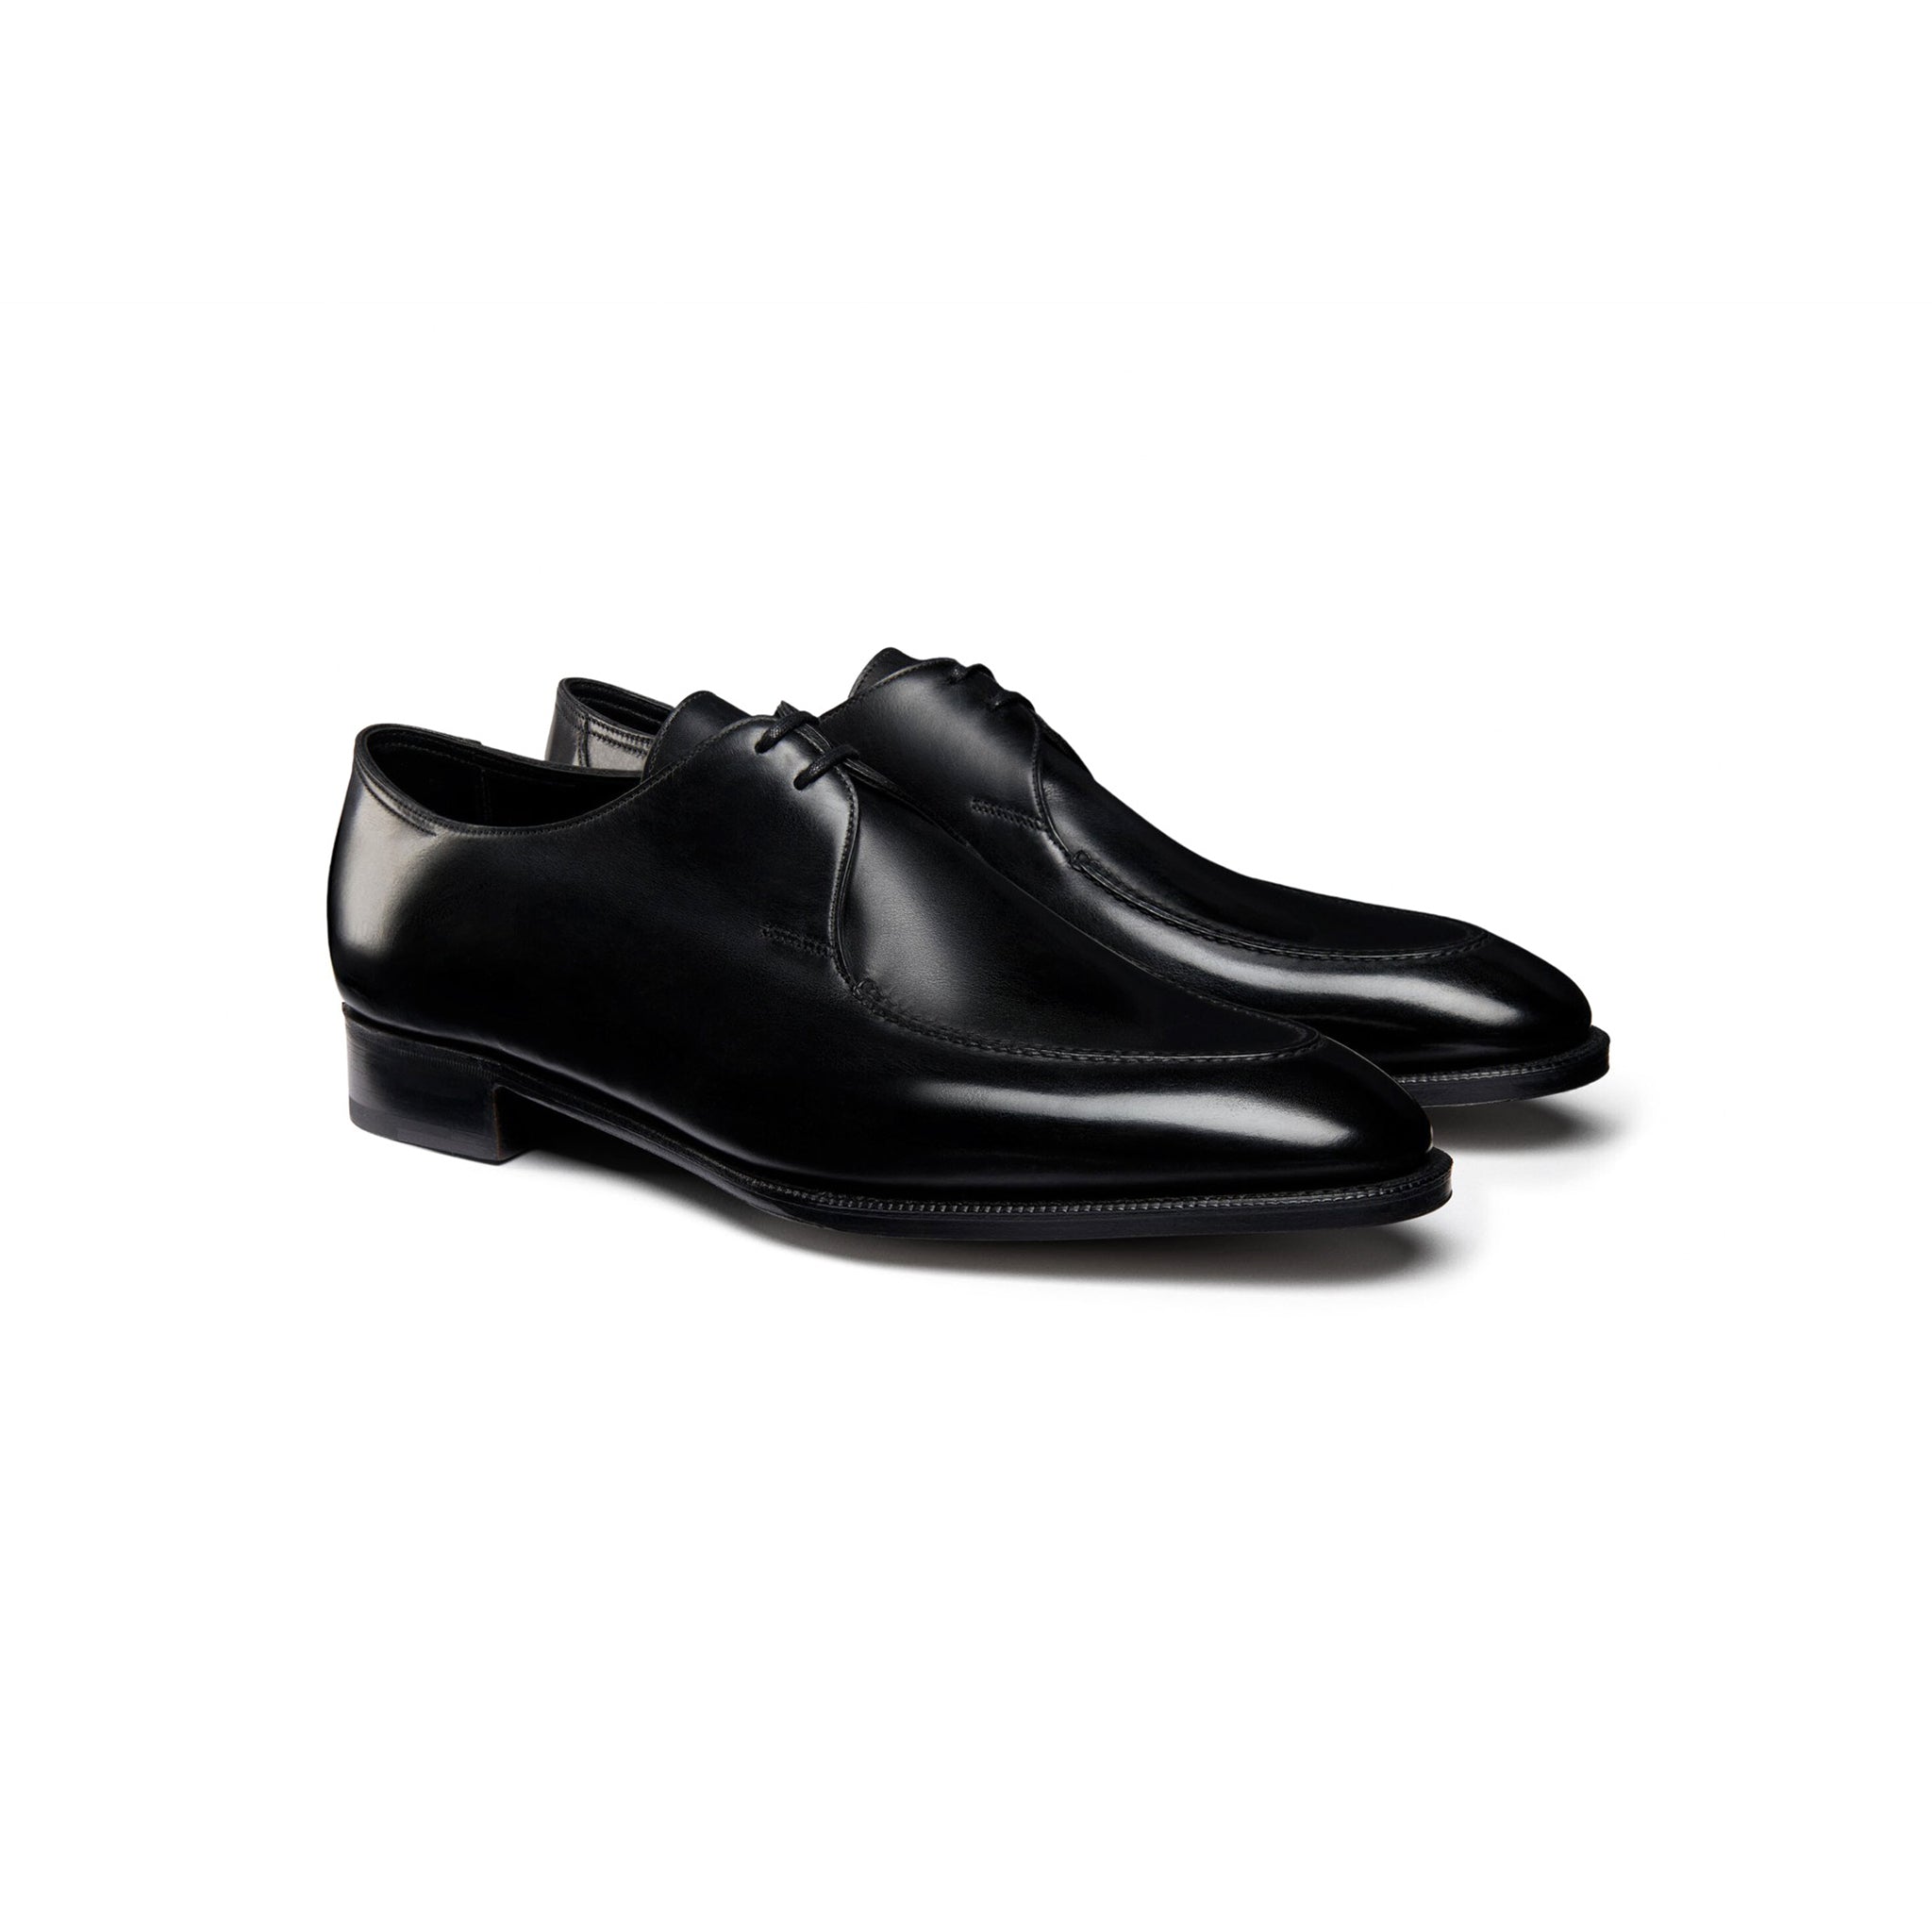 Classic Black Derby Shoes for Men's